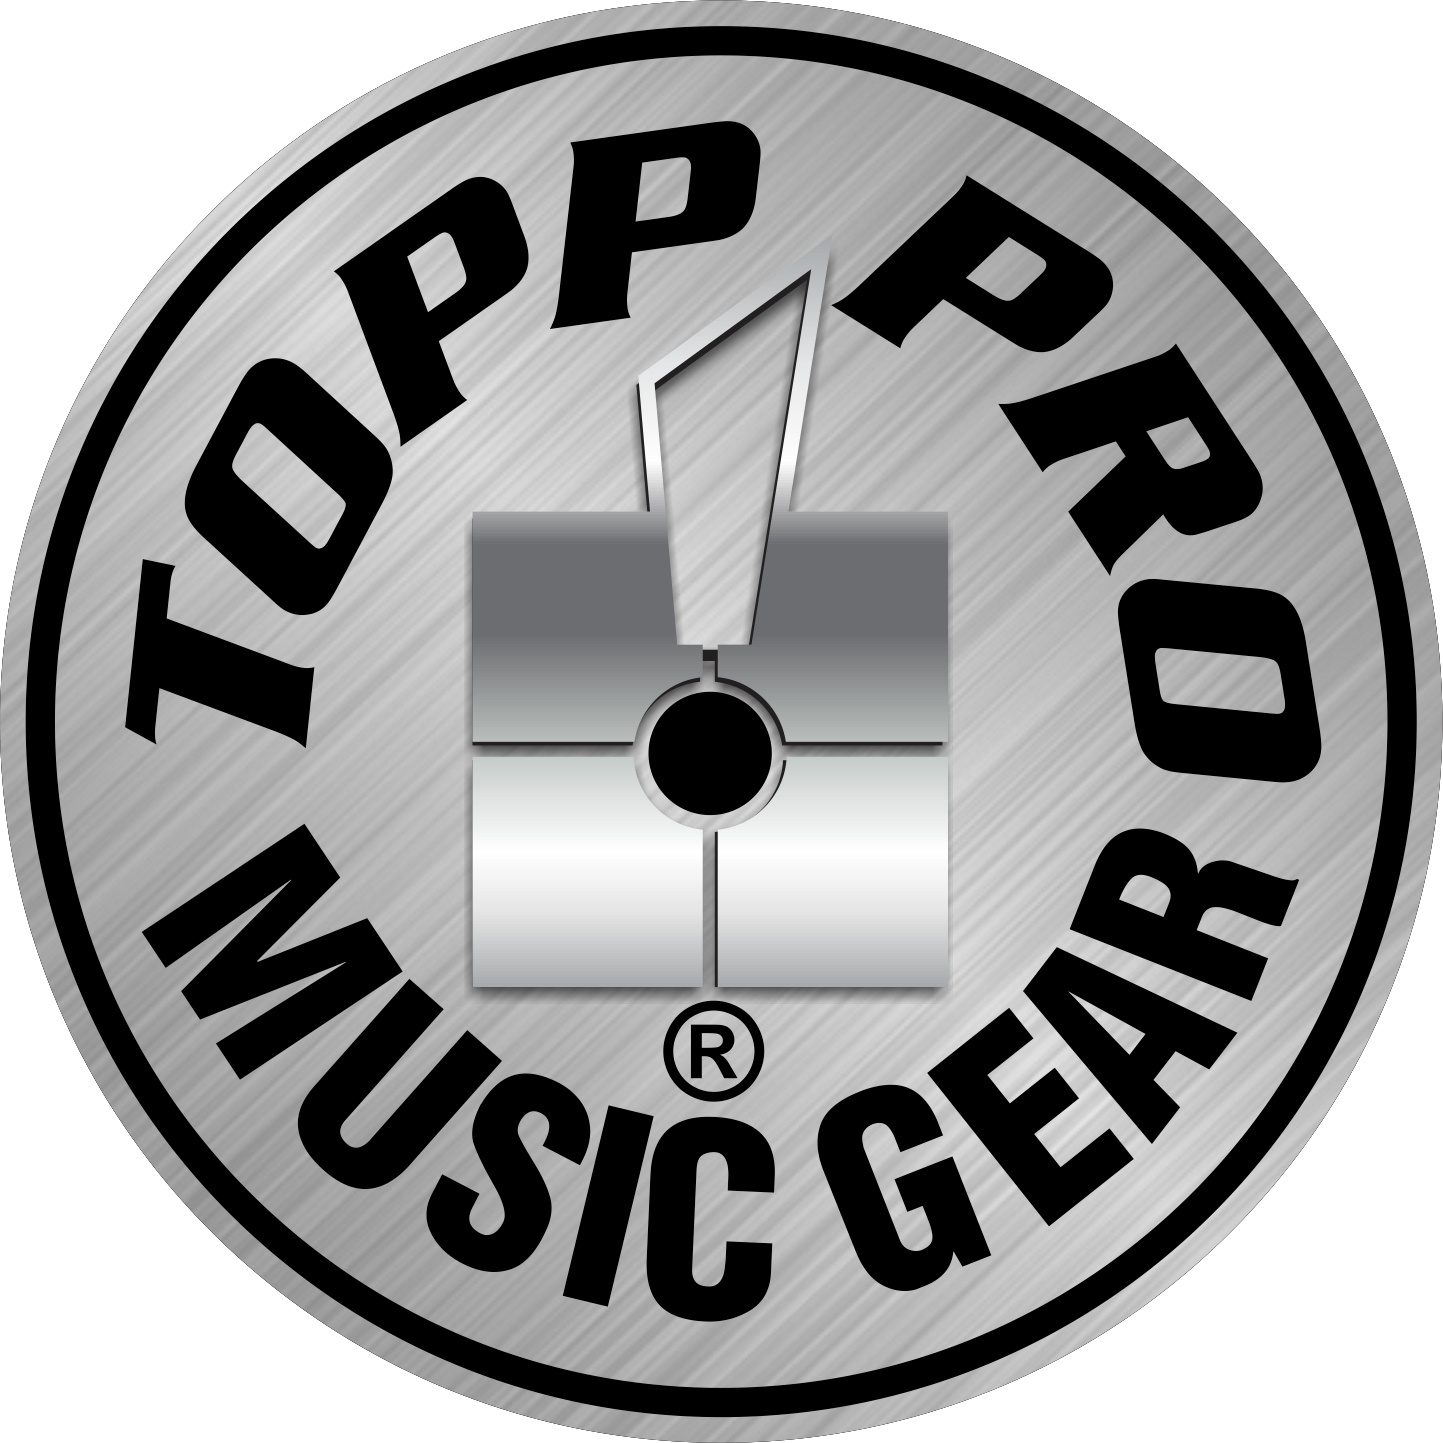 THA-4 (Amplificador Auriculares) Topp Pro - Extreme Quality Control